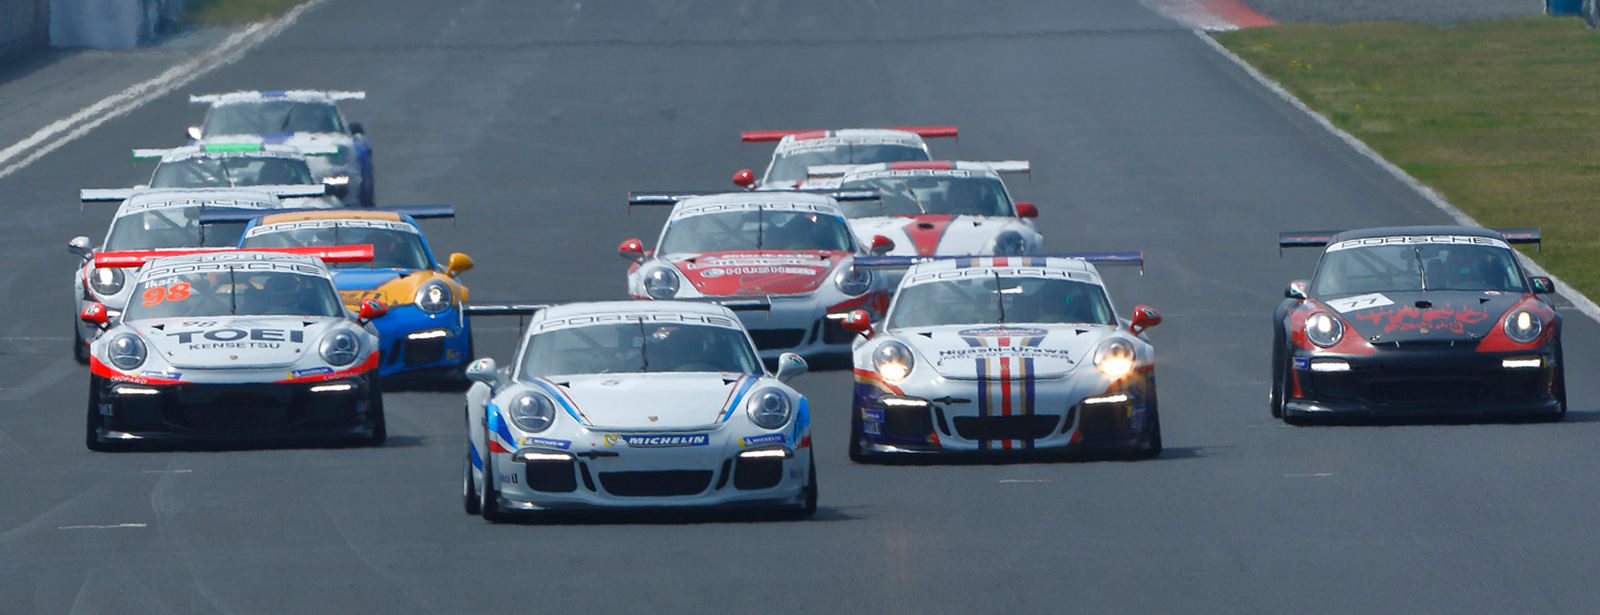 Porsche - GT3 カップチャレンジ ジャパン - SUZUKA 10 HOURS / Porsche GT3 Cup Challenge Japan第5戦観戦プラン「ポルシェ ホスピタリティパッケージ」のご案内